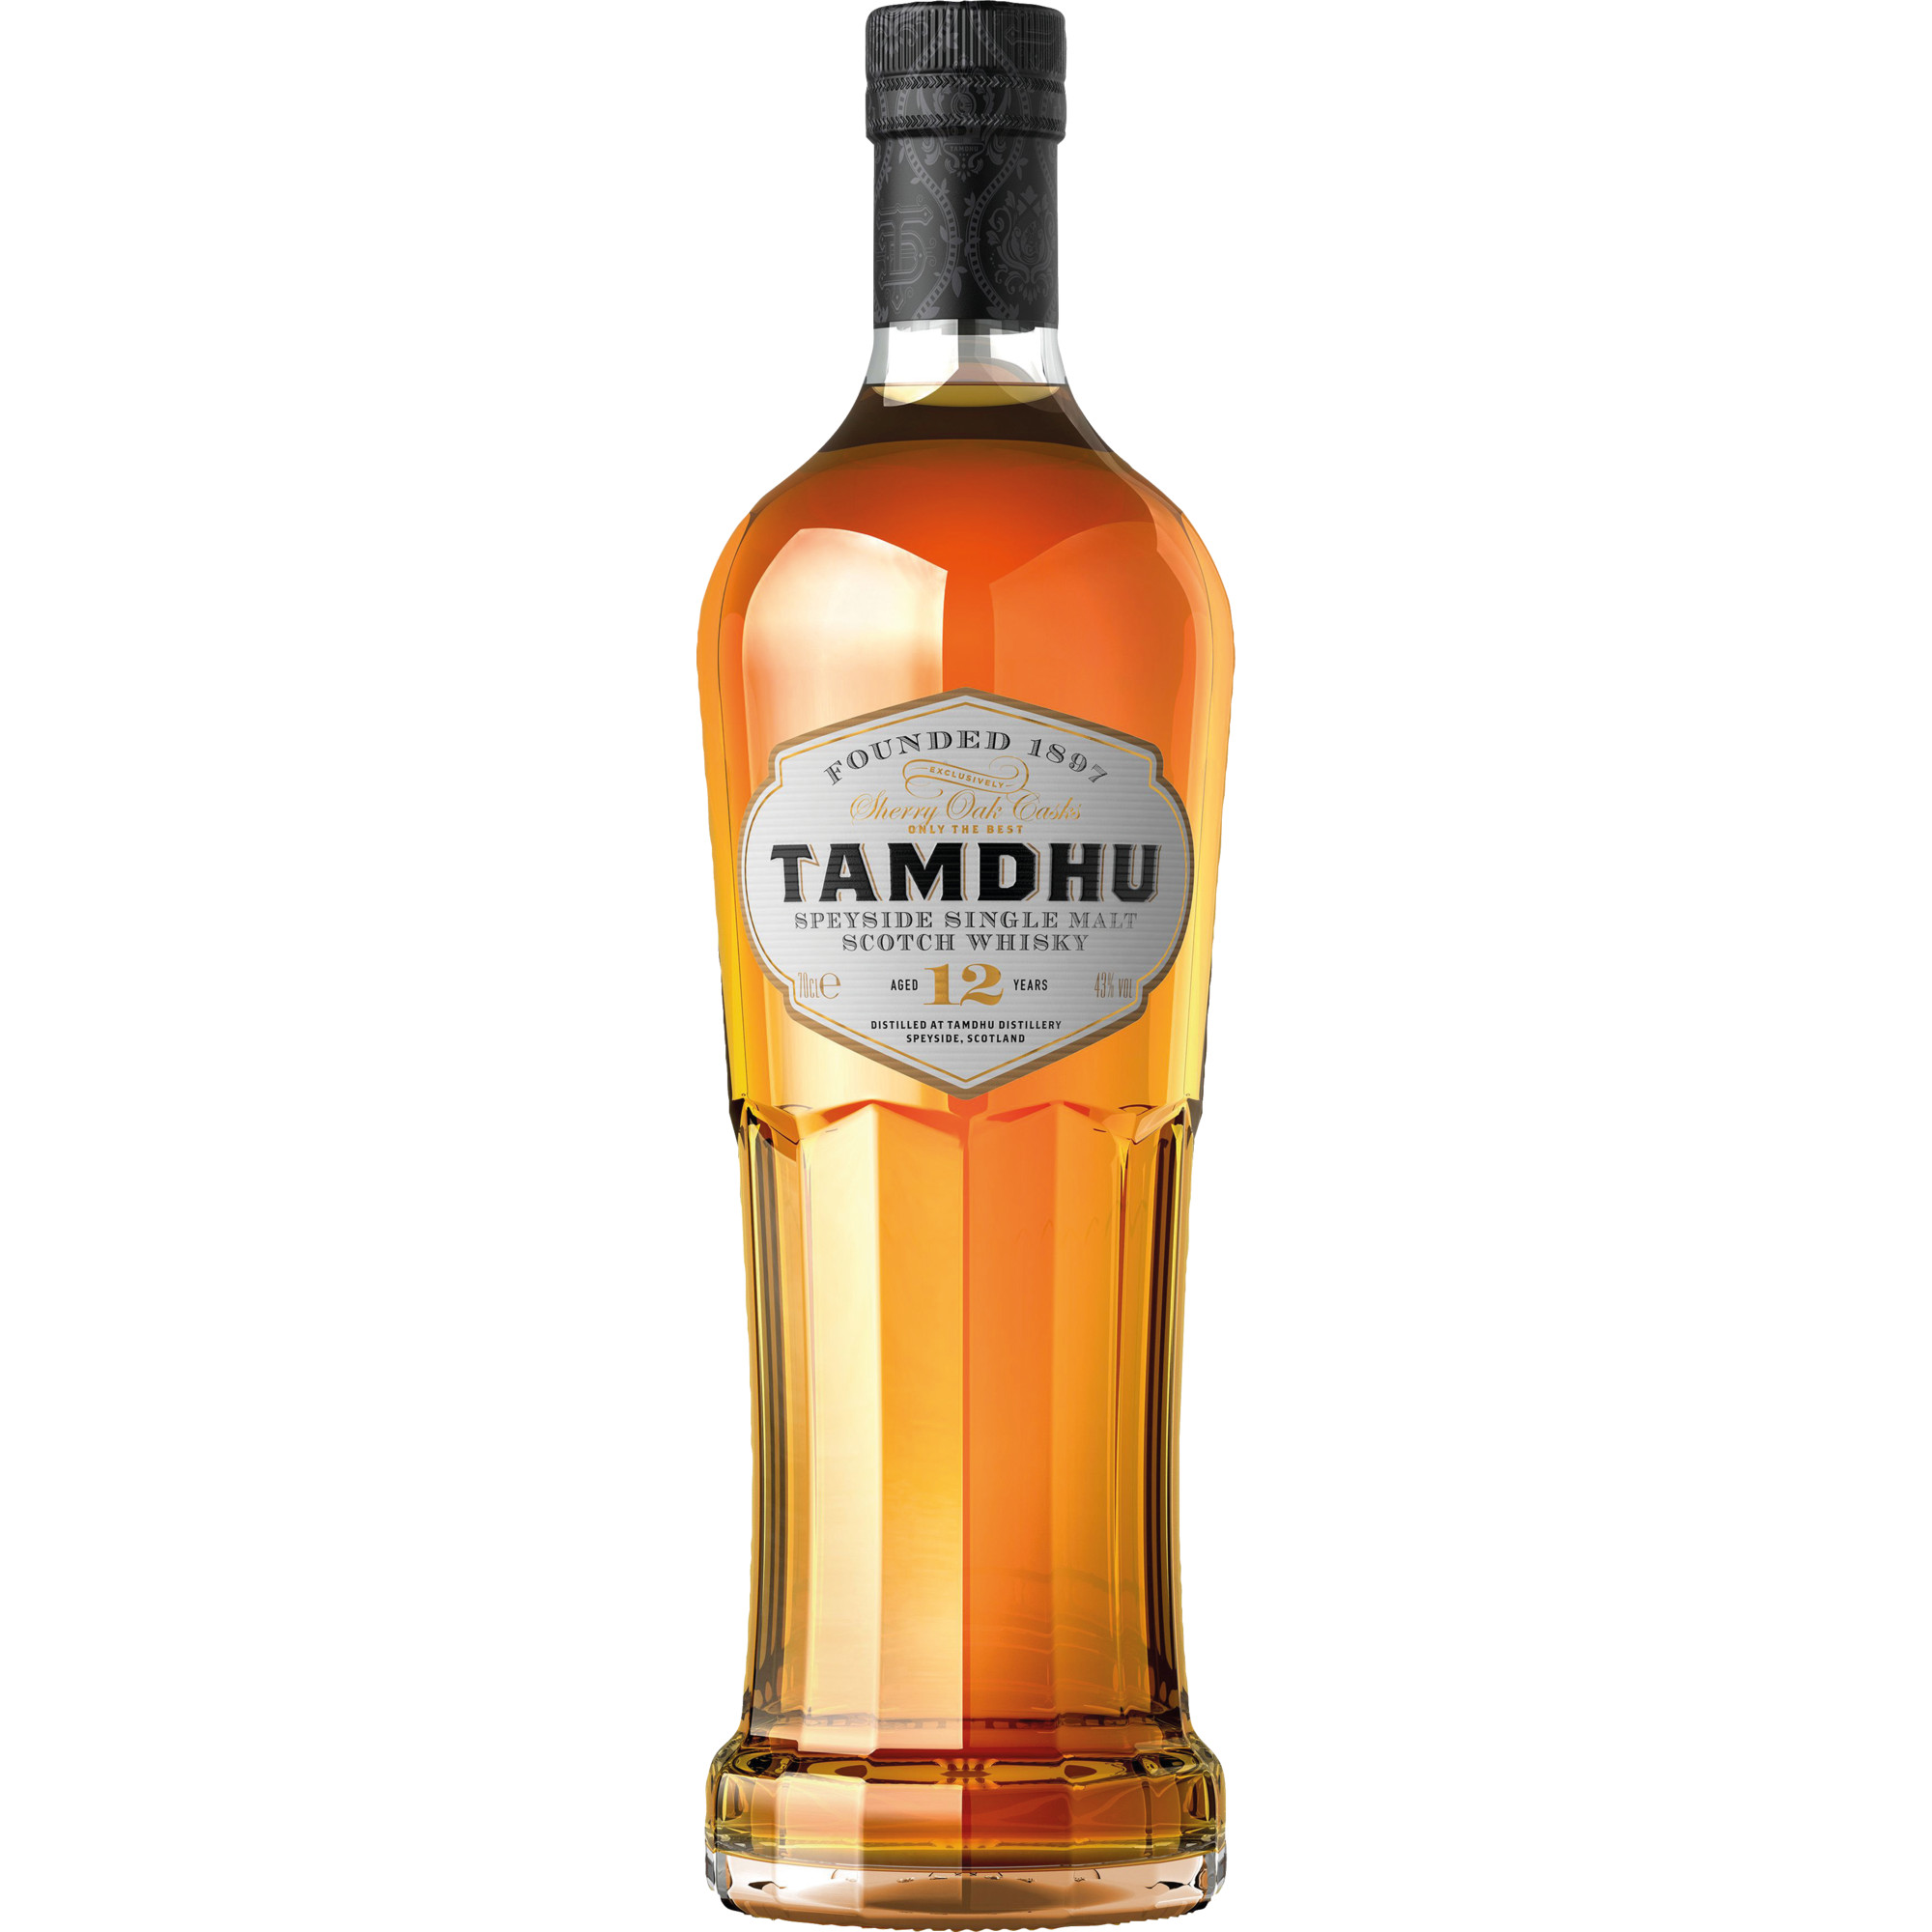 Tamdhu 12 YO Speyside Single Malt Scotch Whisky, 0,7l, 43 % Vol., Schottland, Spirituosen Ian Macleod Distilleries Ltd., Great Britain Hawesko DE